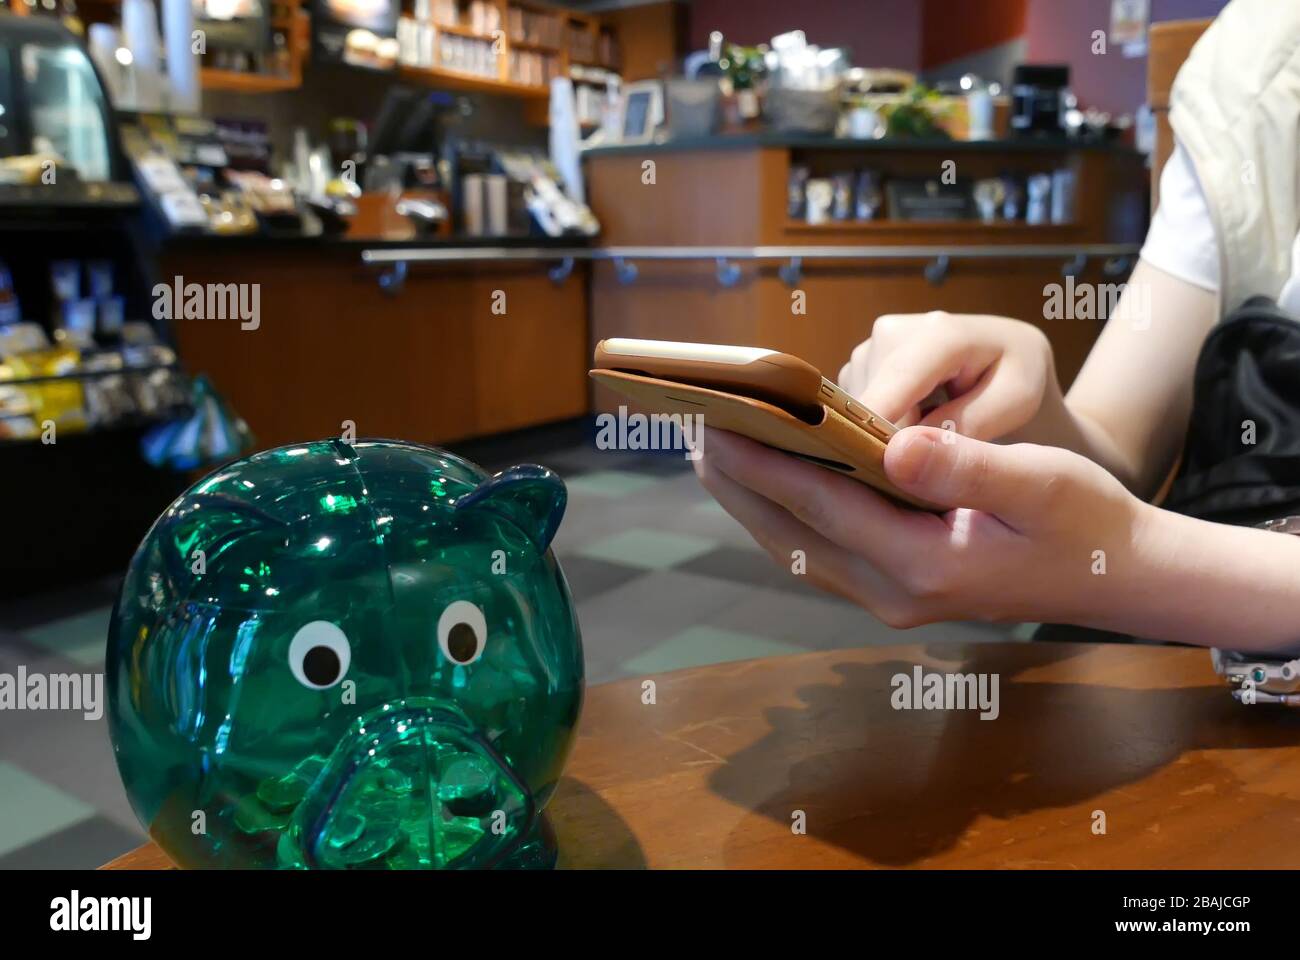 Hand browsing website on iphone inside Starbucks store Stock Photo